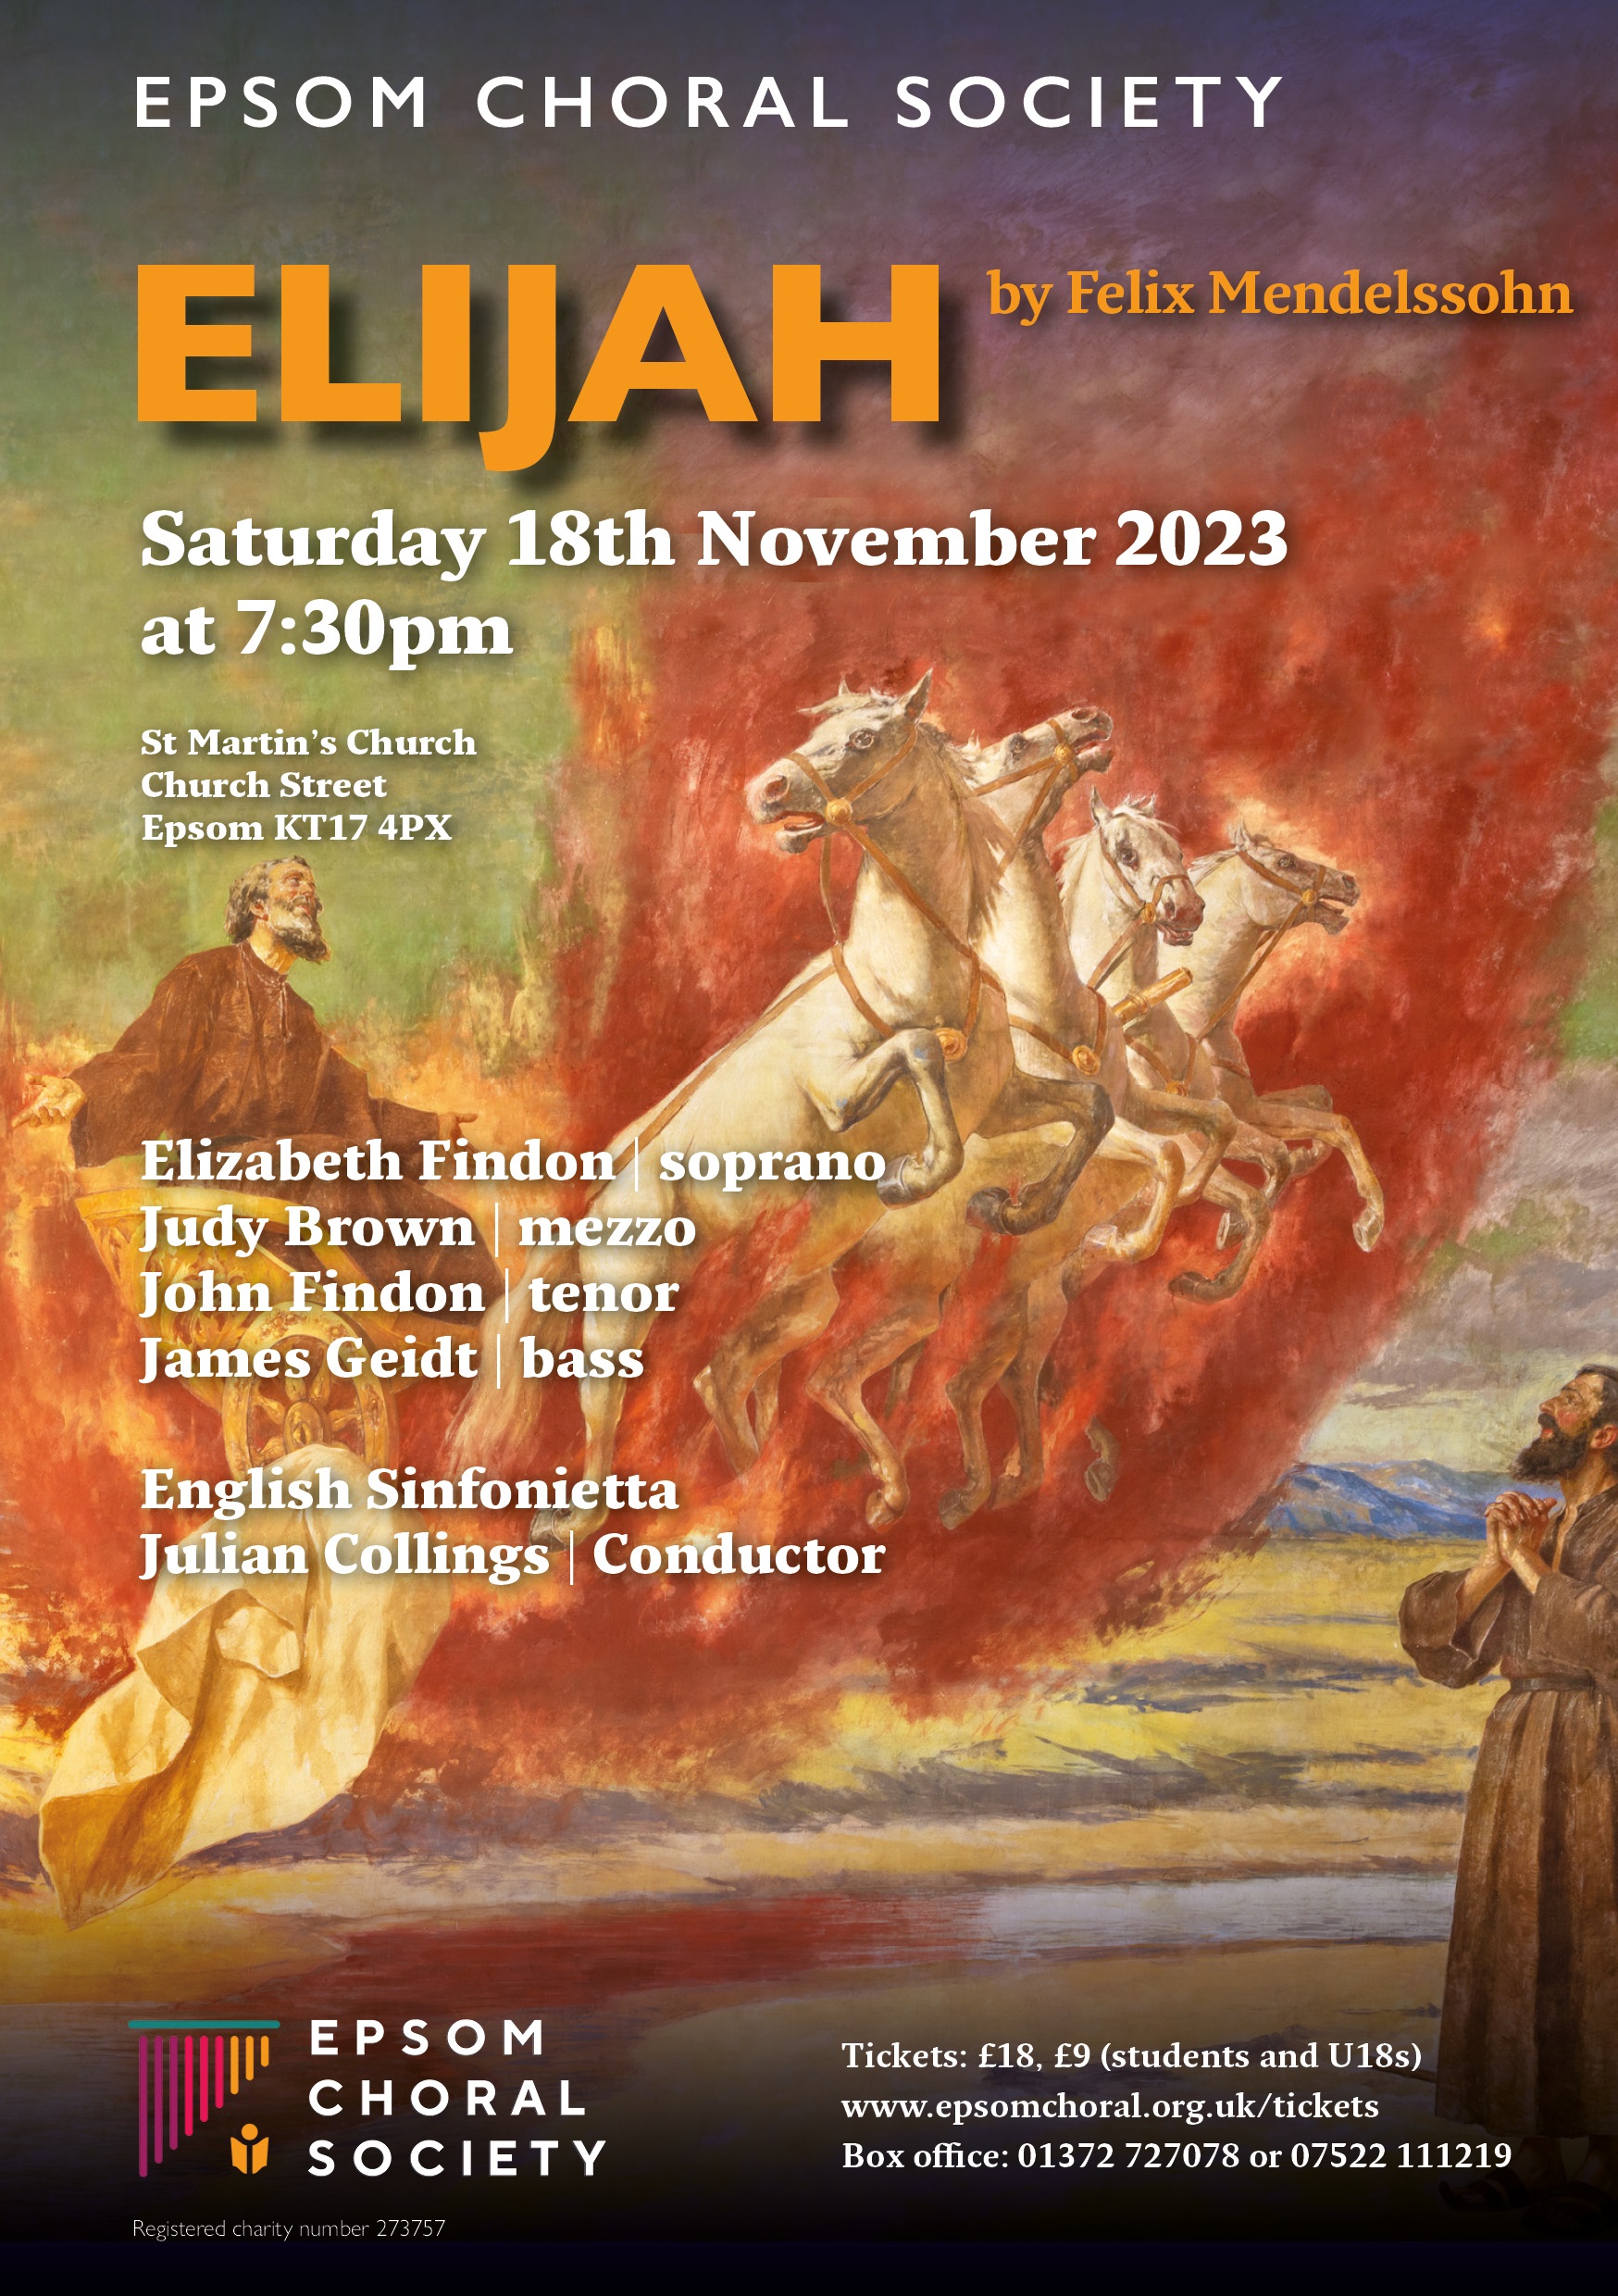 Epsom Choral Society Elijah Concert flyer